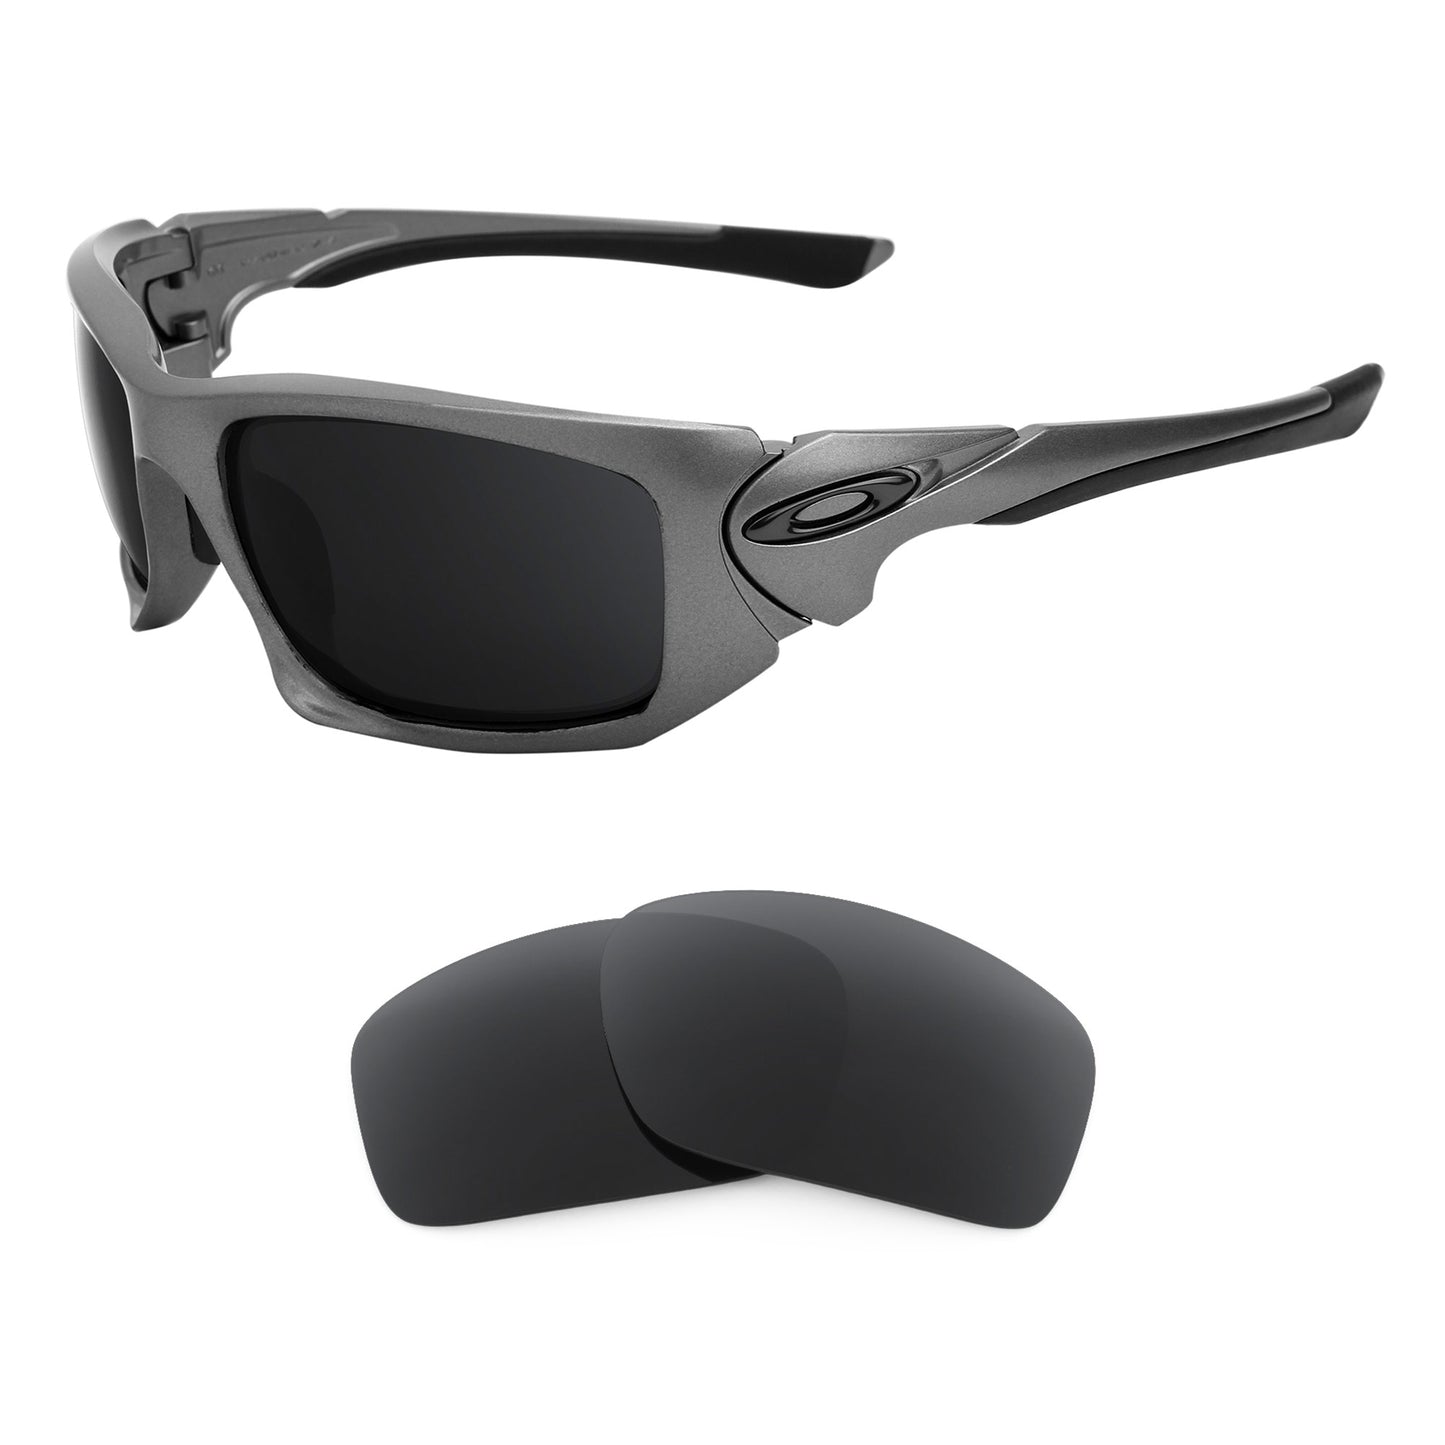 Oakley Scalpel (Low Bridge Fit) sunglasses with replacement lenses